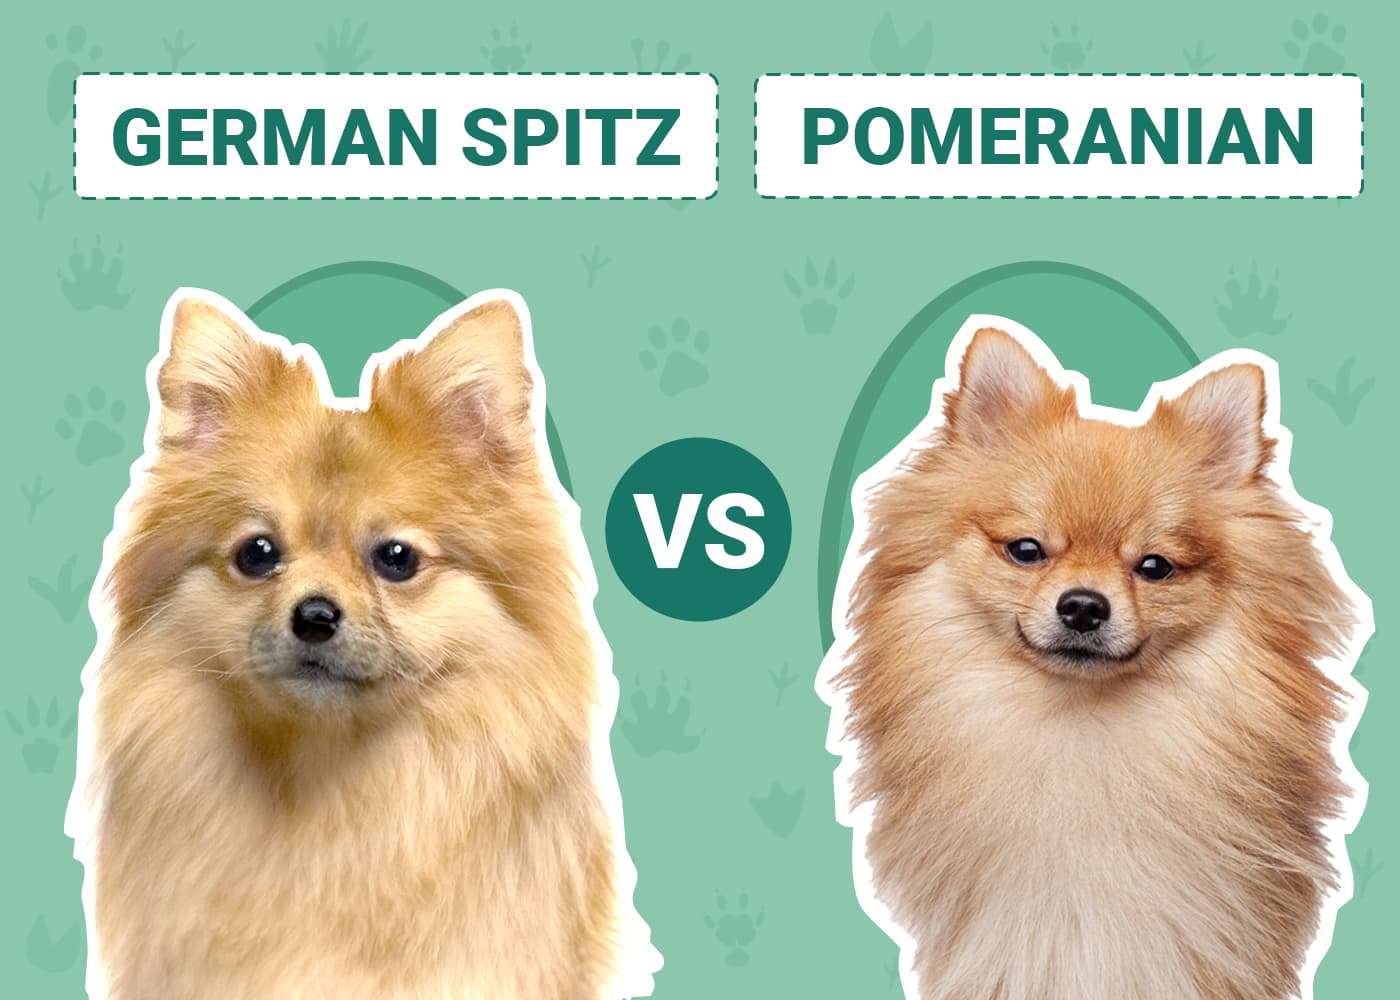 German Spitz vs Pomeranian